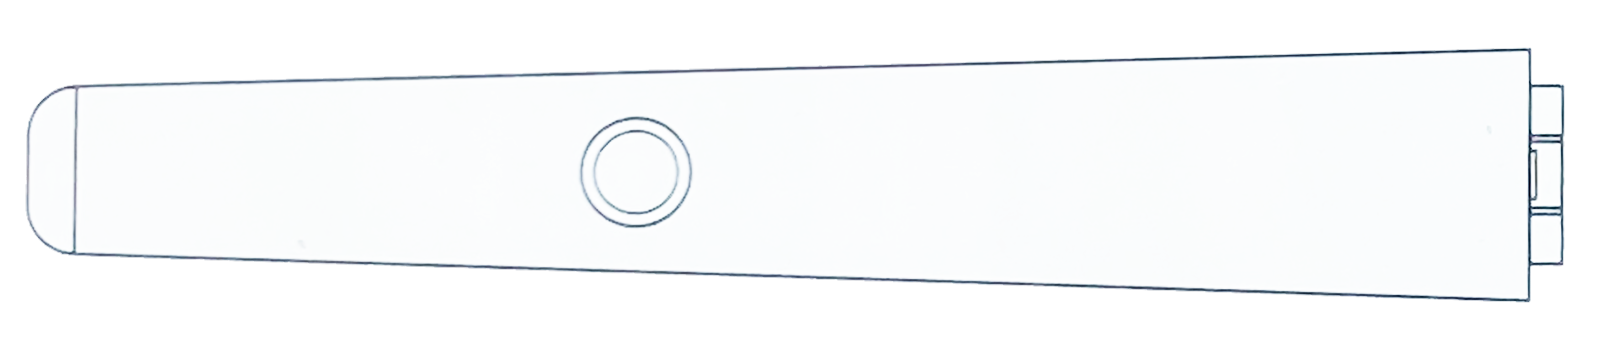 UVC Germicidal LED lamp schematic horizontal view